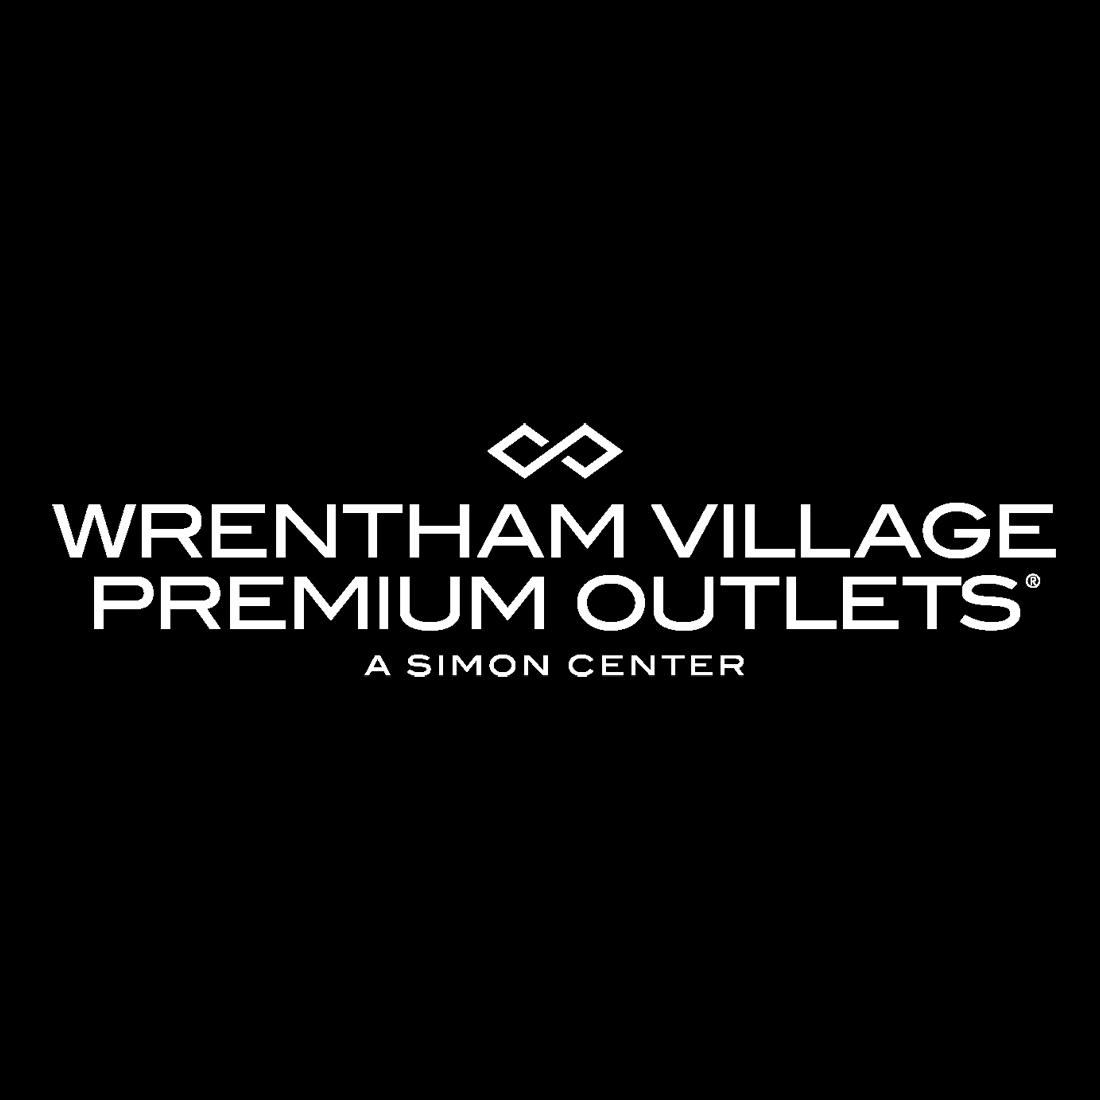 Wrentham Village Premium Outlets, Wrentham Massachusetts (MA) - 0